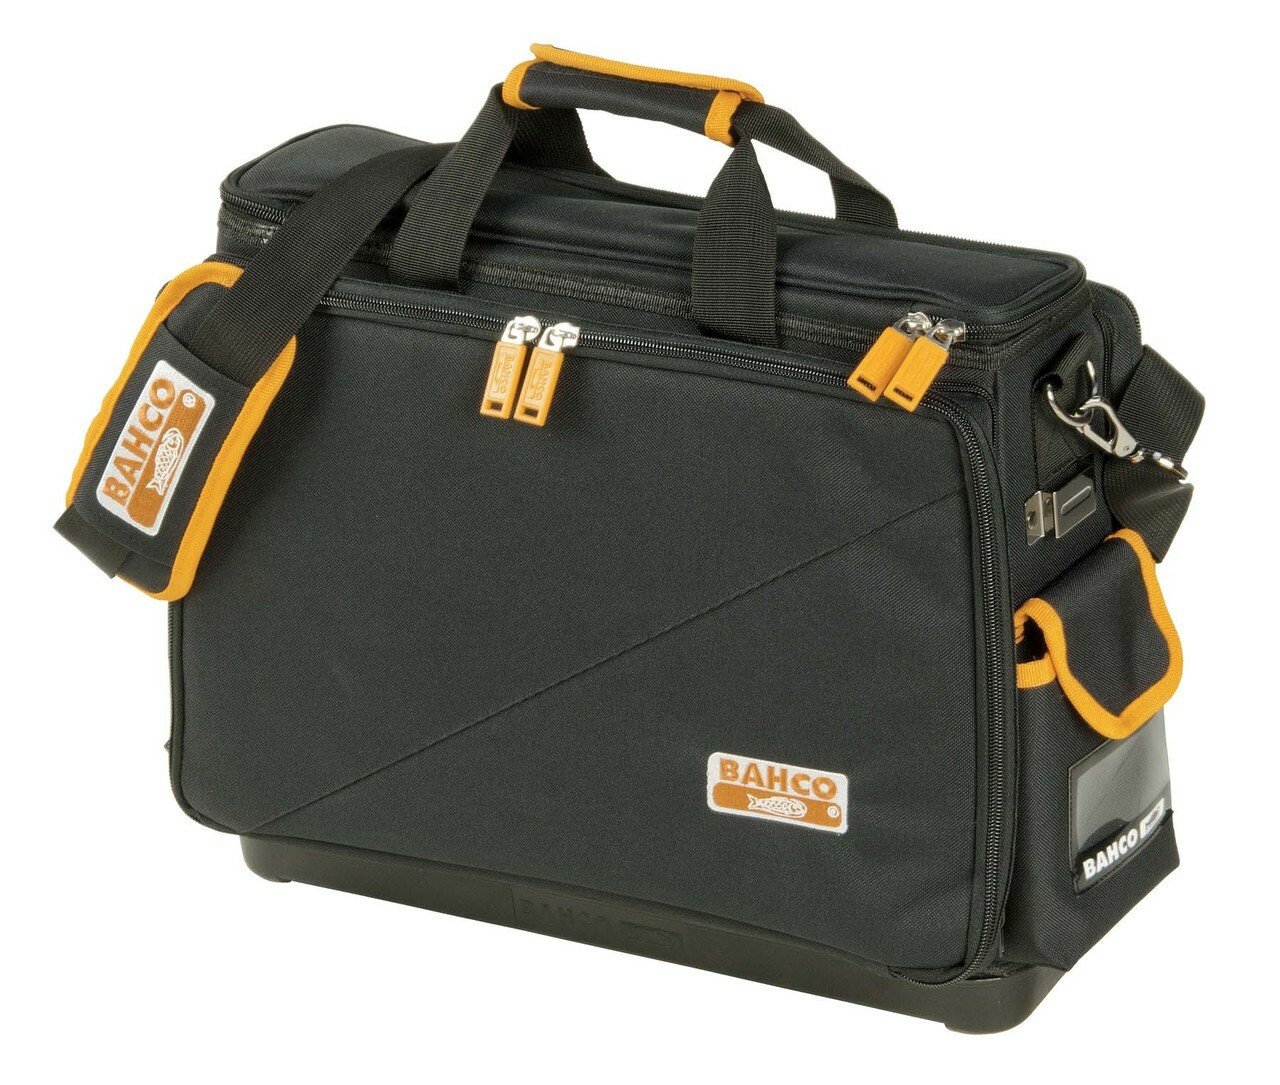 17" Bahco Laptop & Tool Bag with Hard Bottom - 4750FB4-18